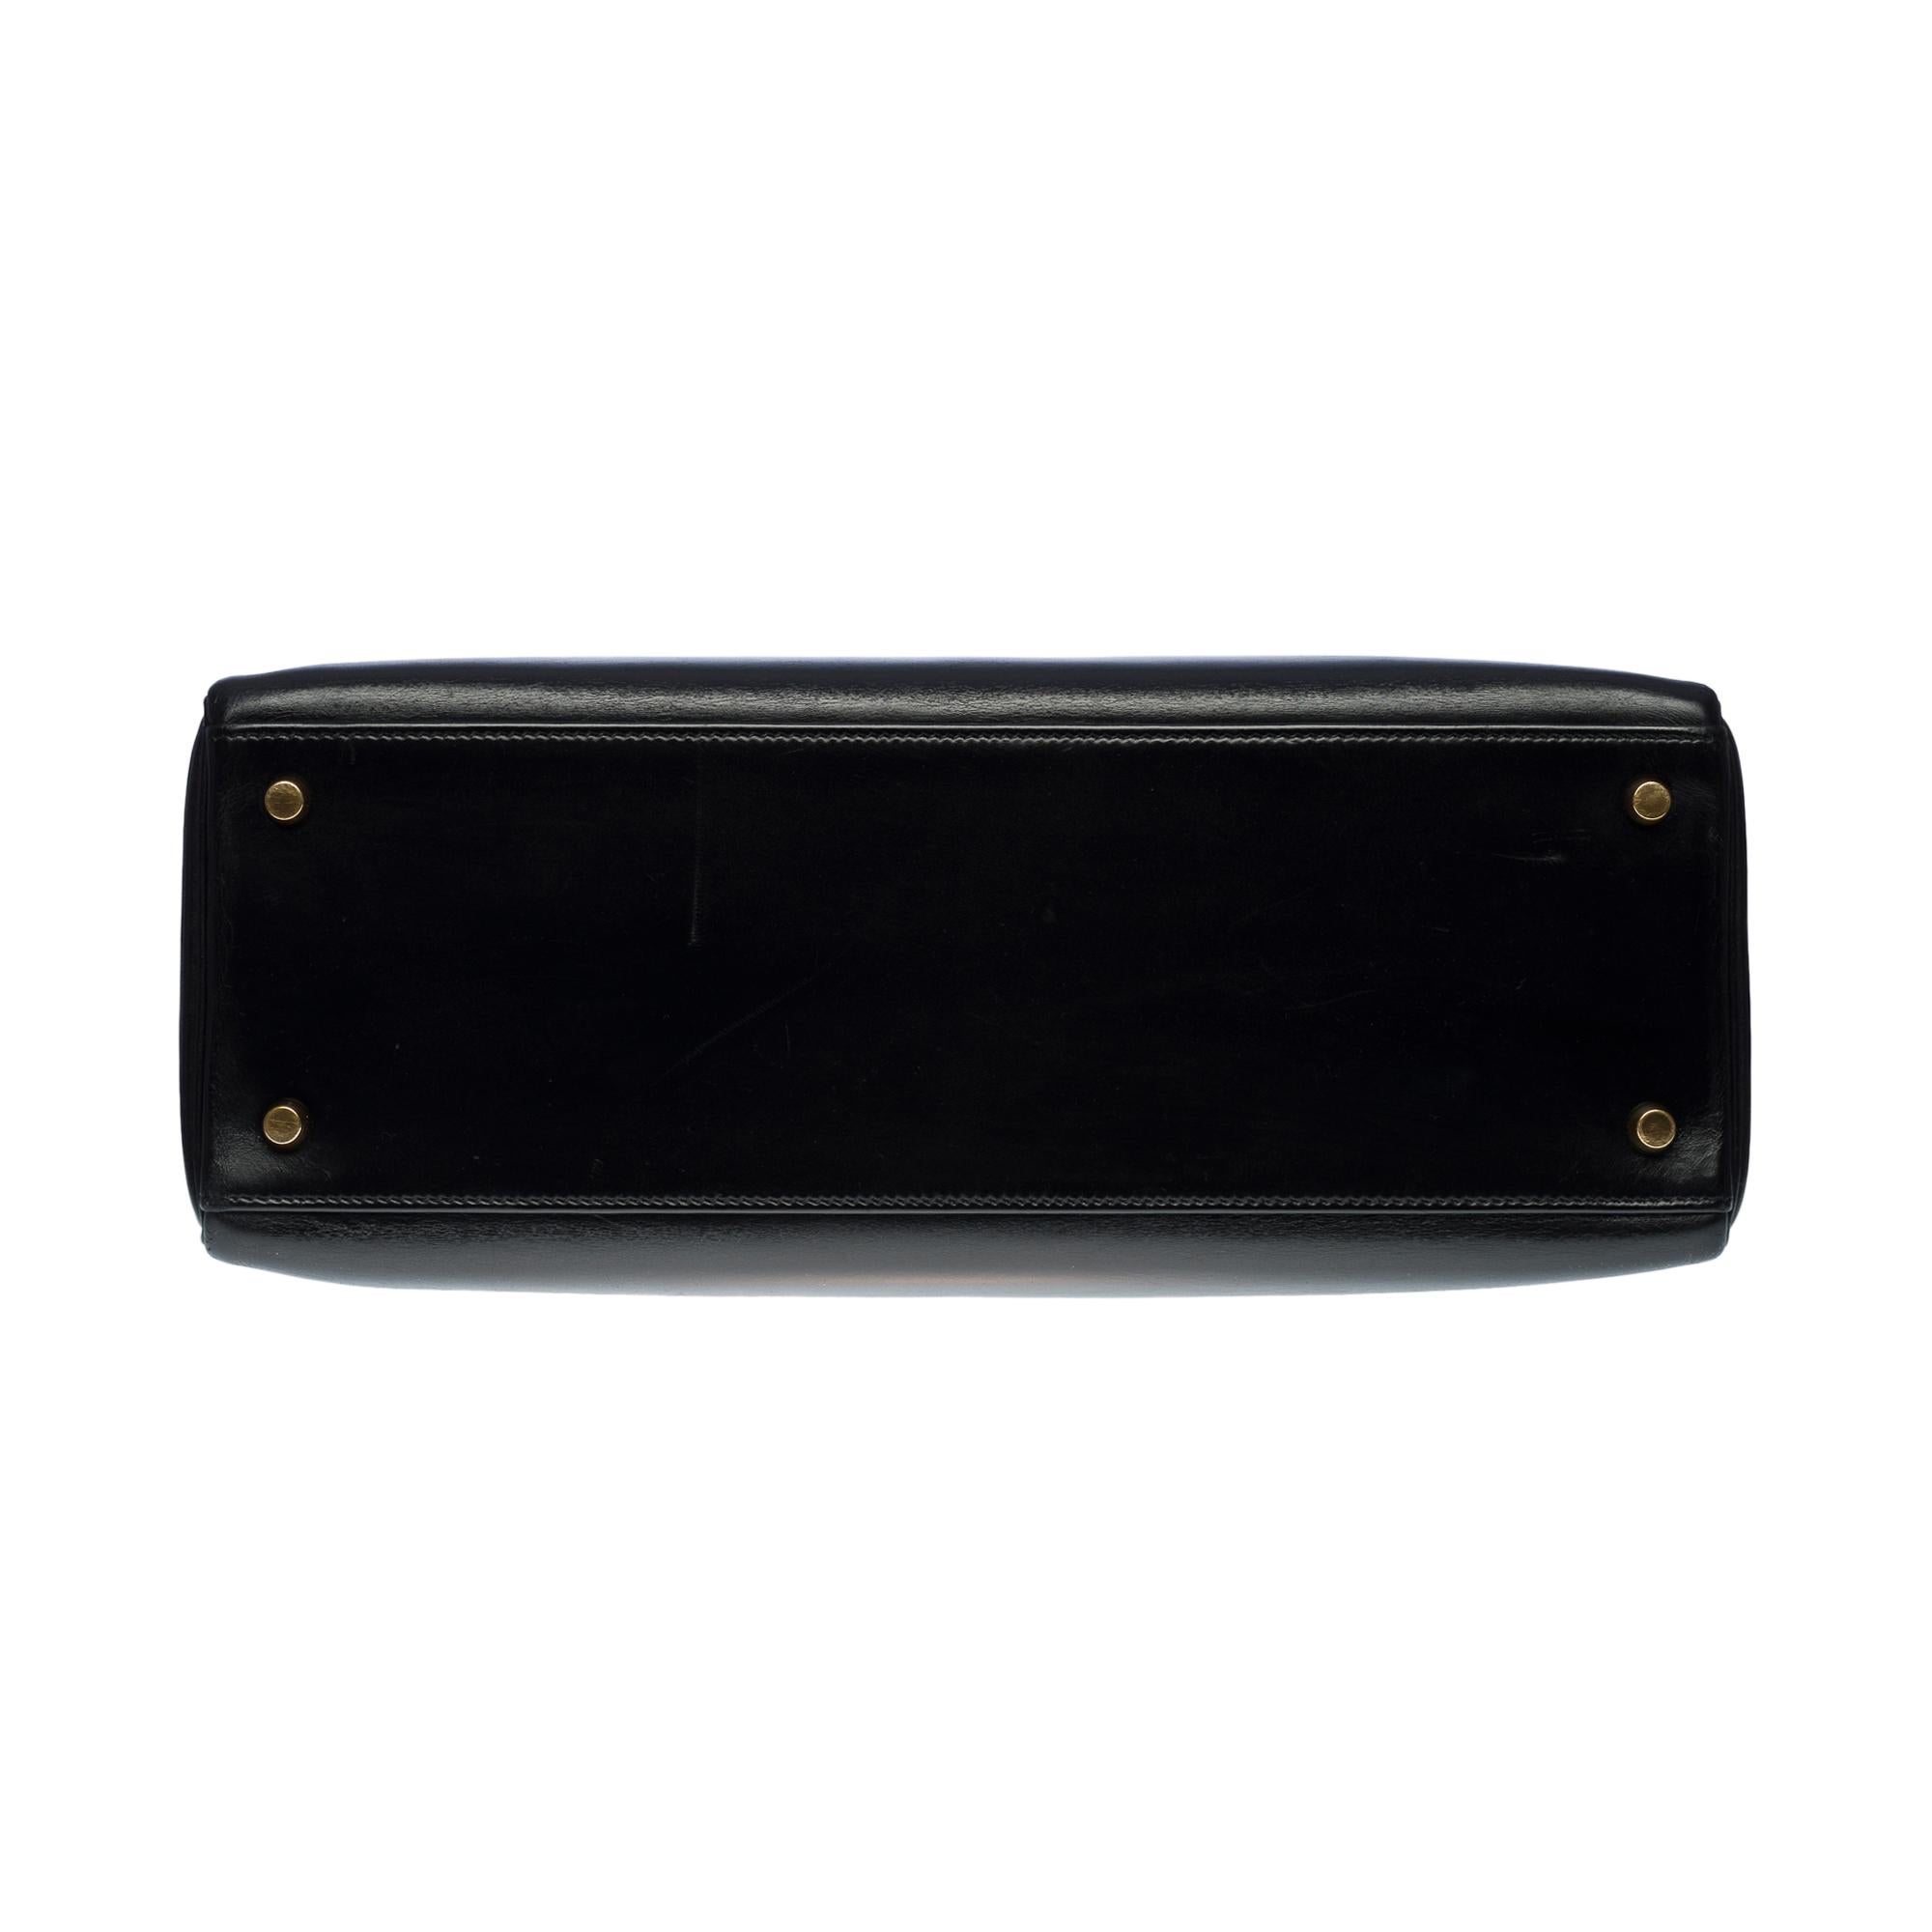 Gorgeous Hermès Kelly 35 retourne handbag strap in black calfskin leather, GHW 4